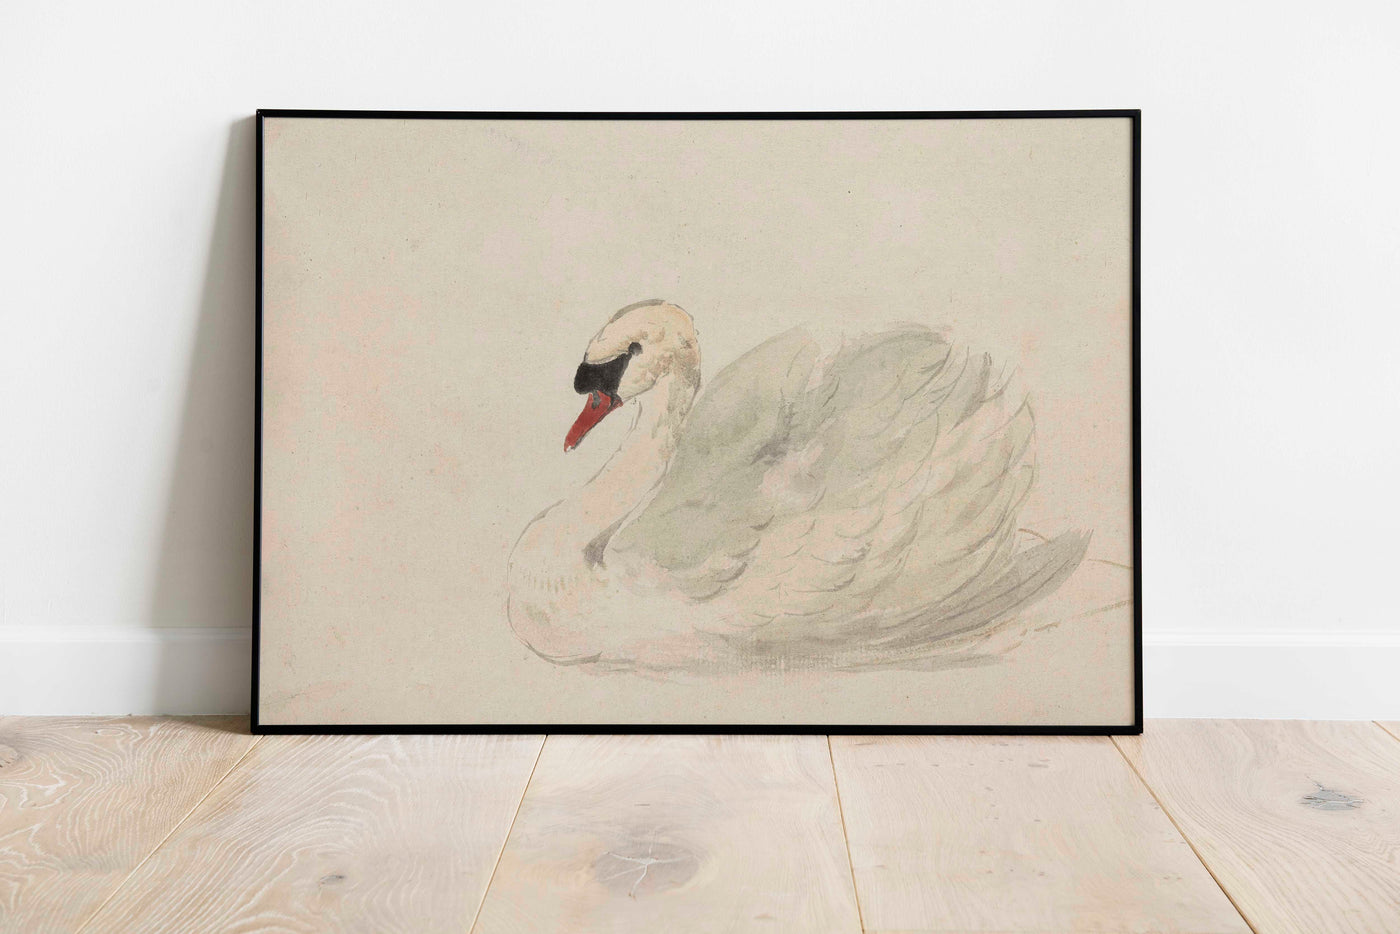 The Swan Print